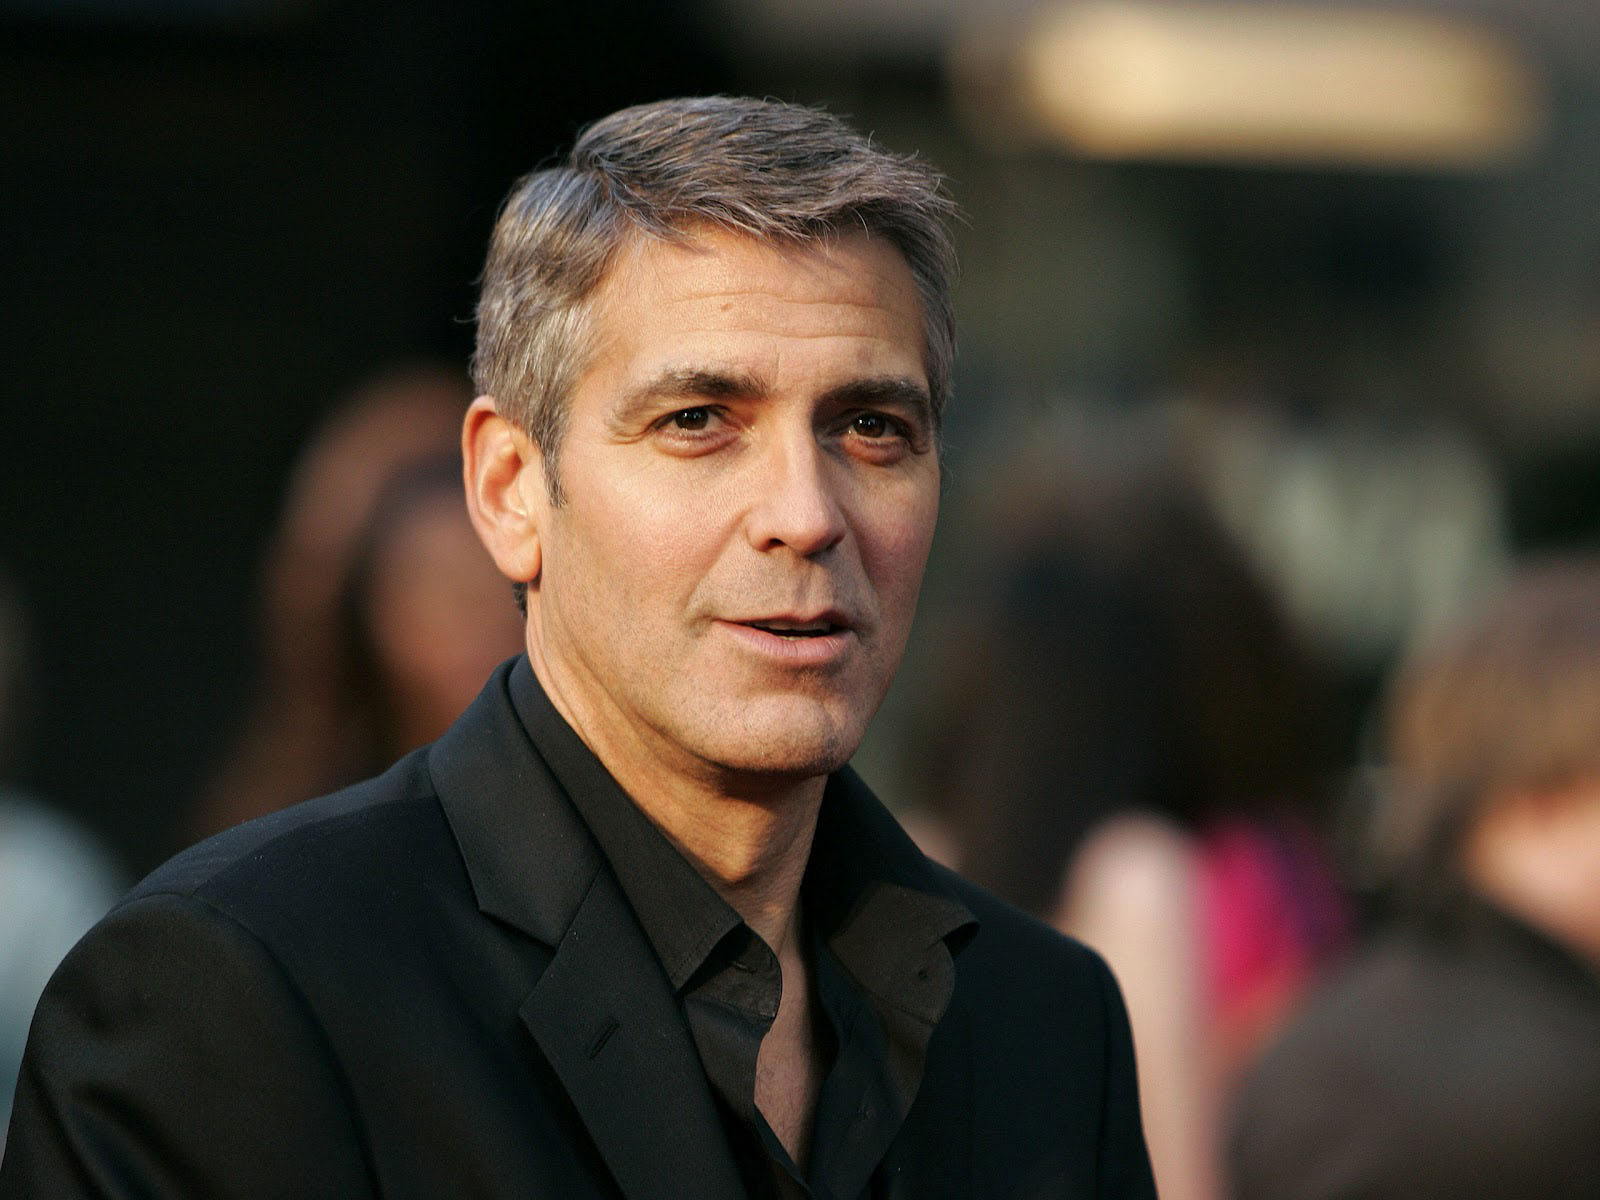 George Clooney Black Suit Computer Background 1065 1600x1200 px